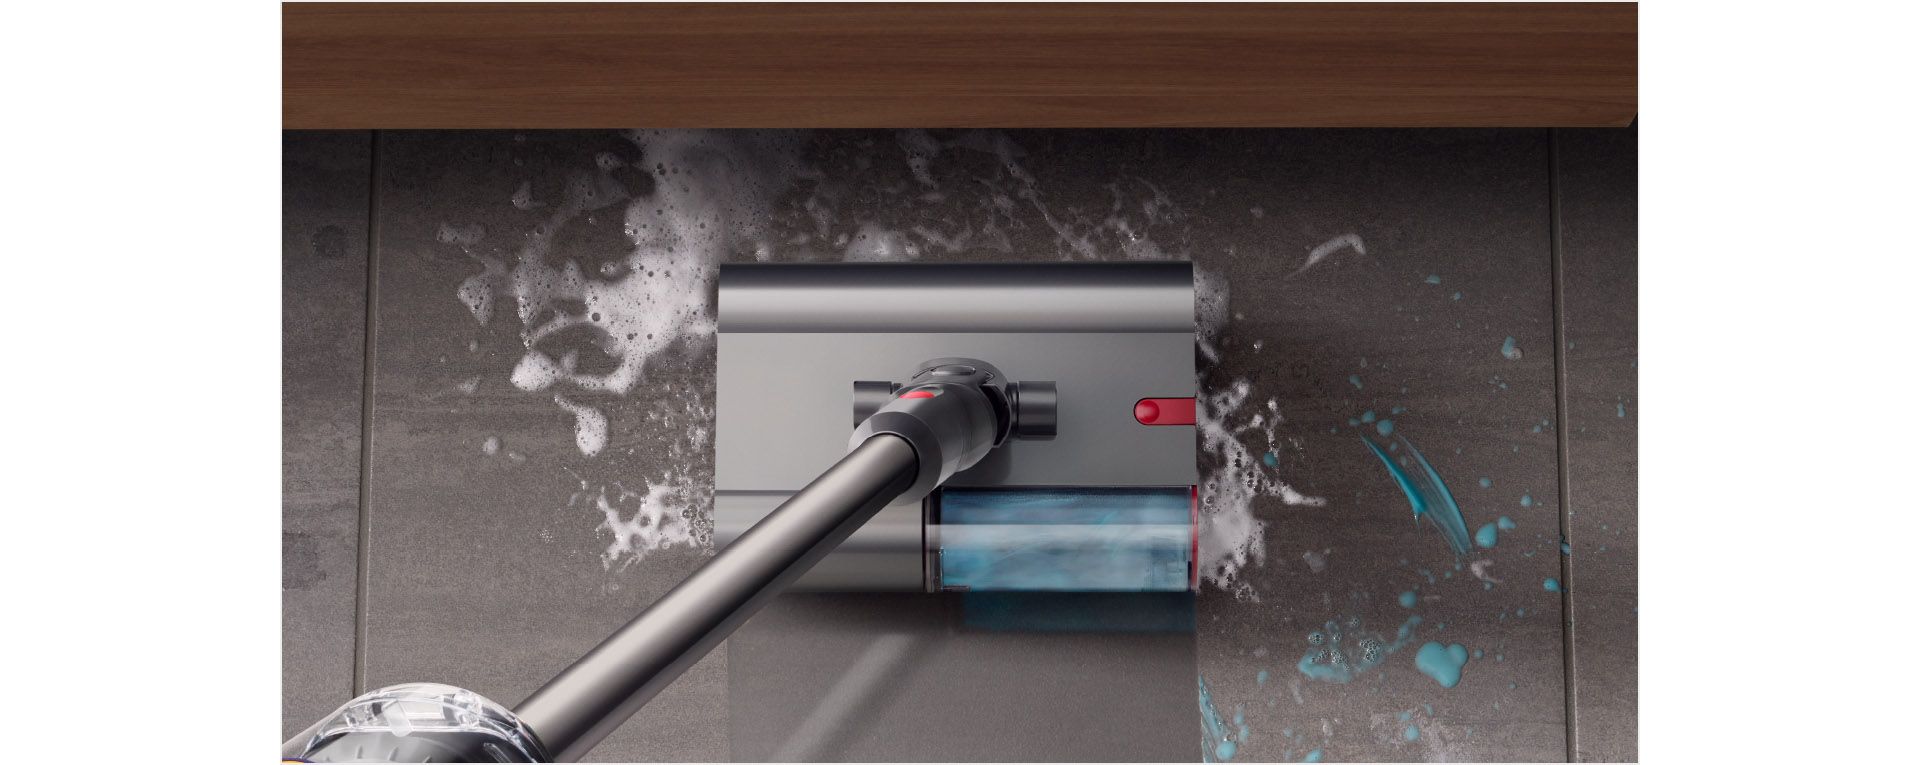 Dyson V12s Origin Submarine™ 洗地滾筒吸頭正清理浴室瓷磚地板上的肥皂水和牙膏，而前方有一個水盆。